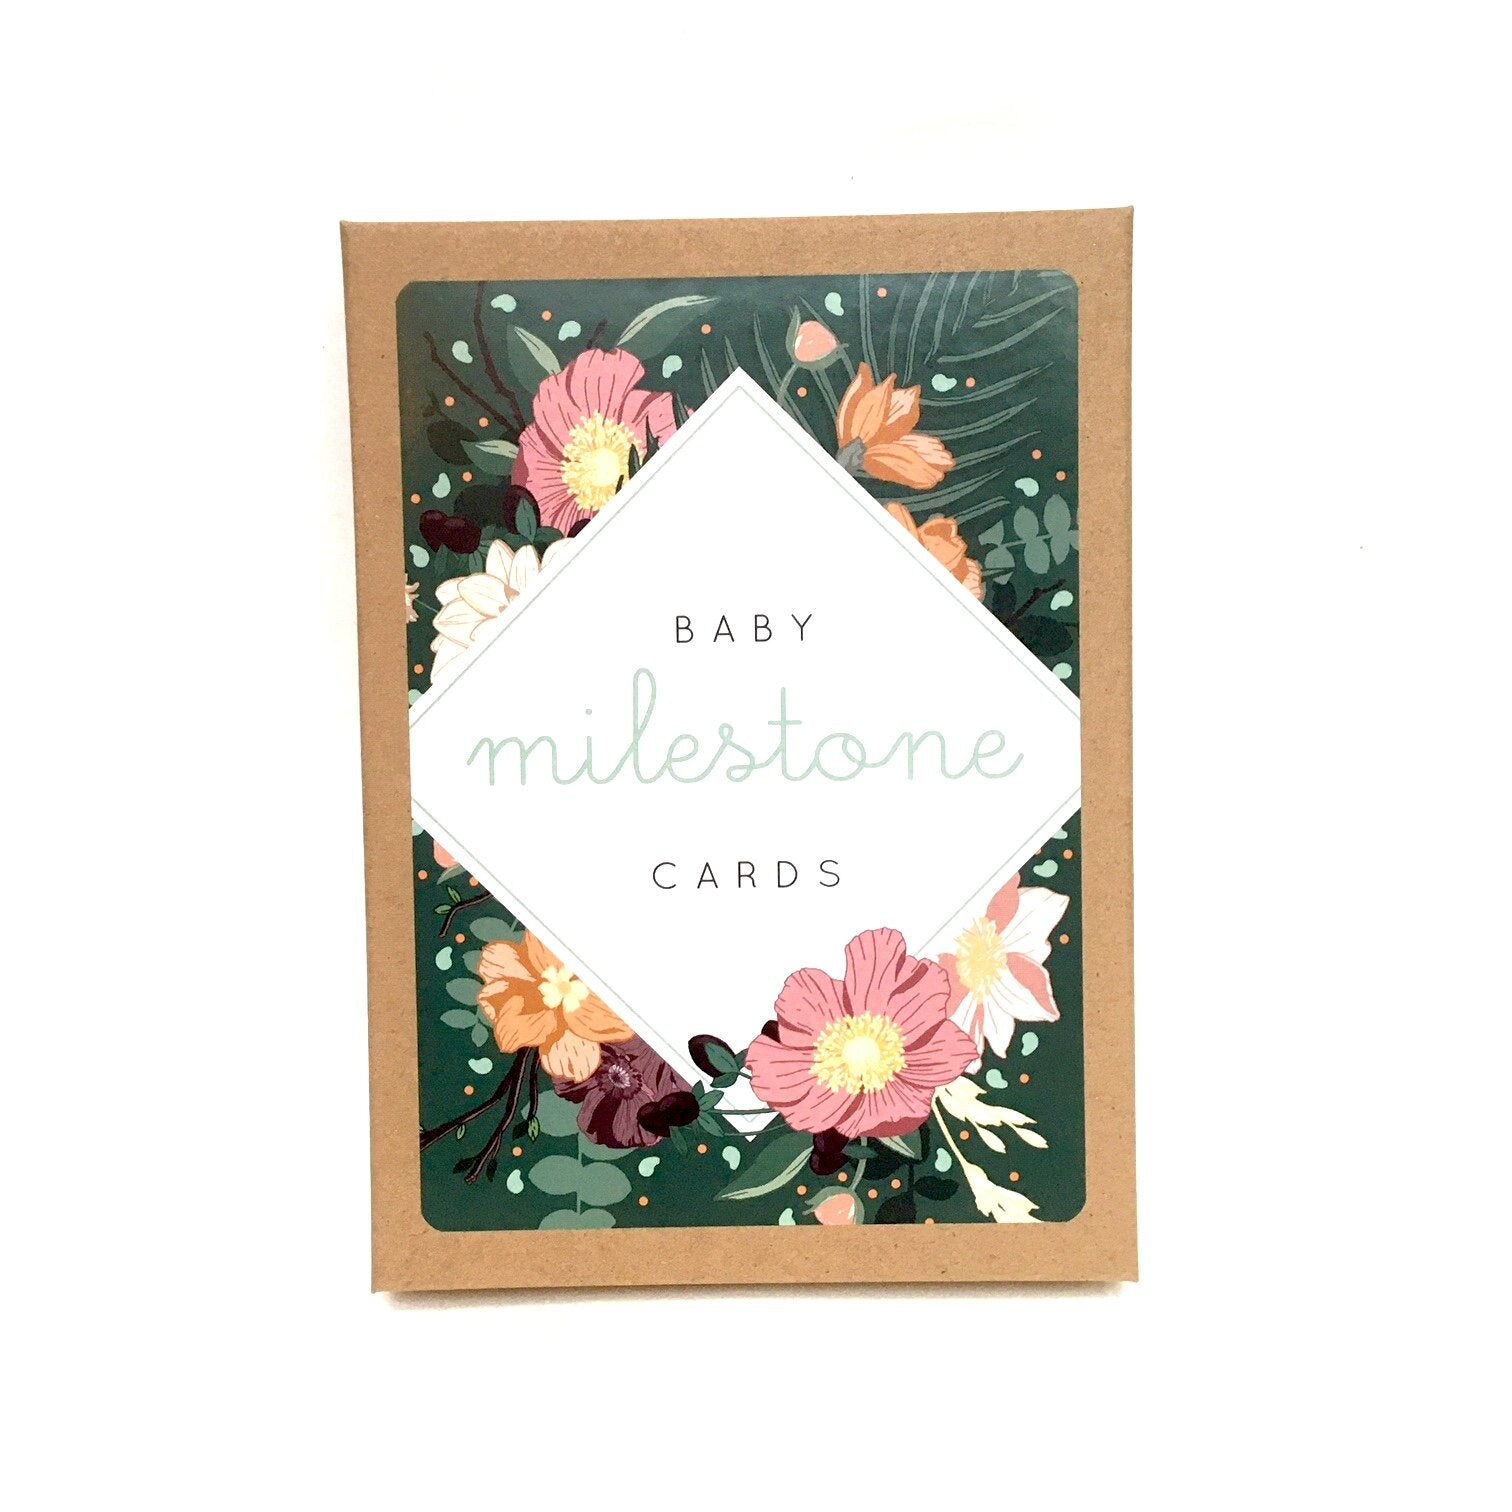 Baby milestone botanical cards gift set - The Bristol Artisan Handmade Sustainable Gifts and Homewares.